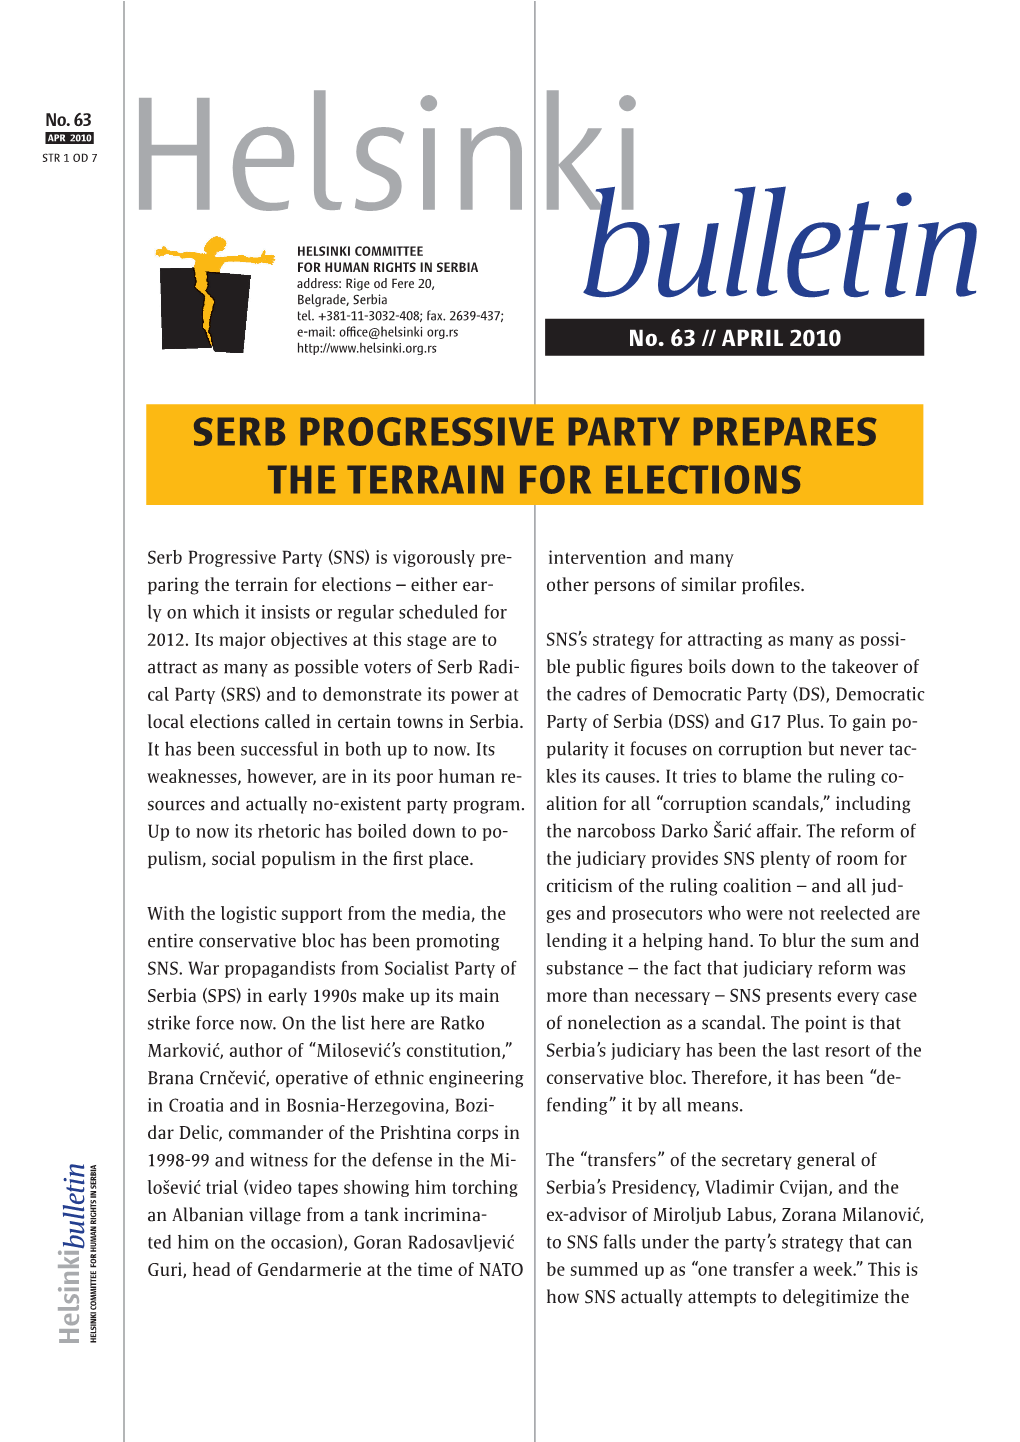 Serb Progressive Party Prepares the Terrain for Elections